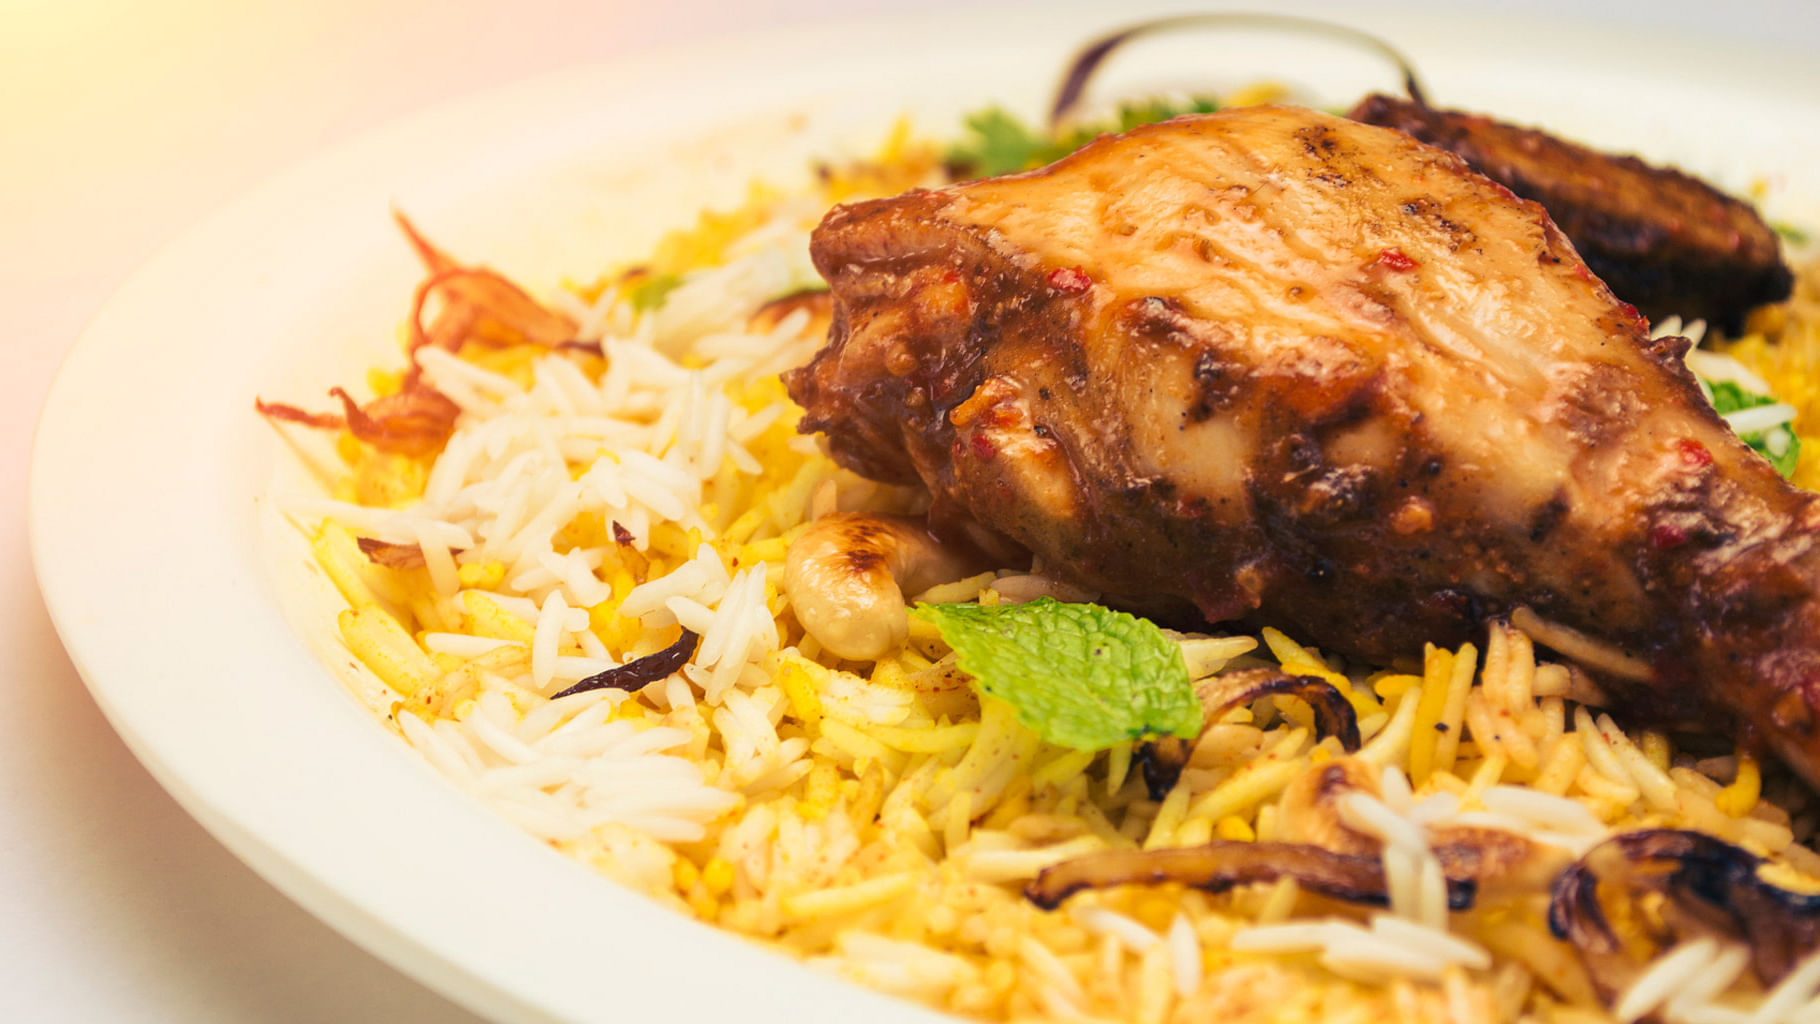 IRCTC curates a delish menu this Pujo season for its Rajdhani, Duronto passengers.